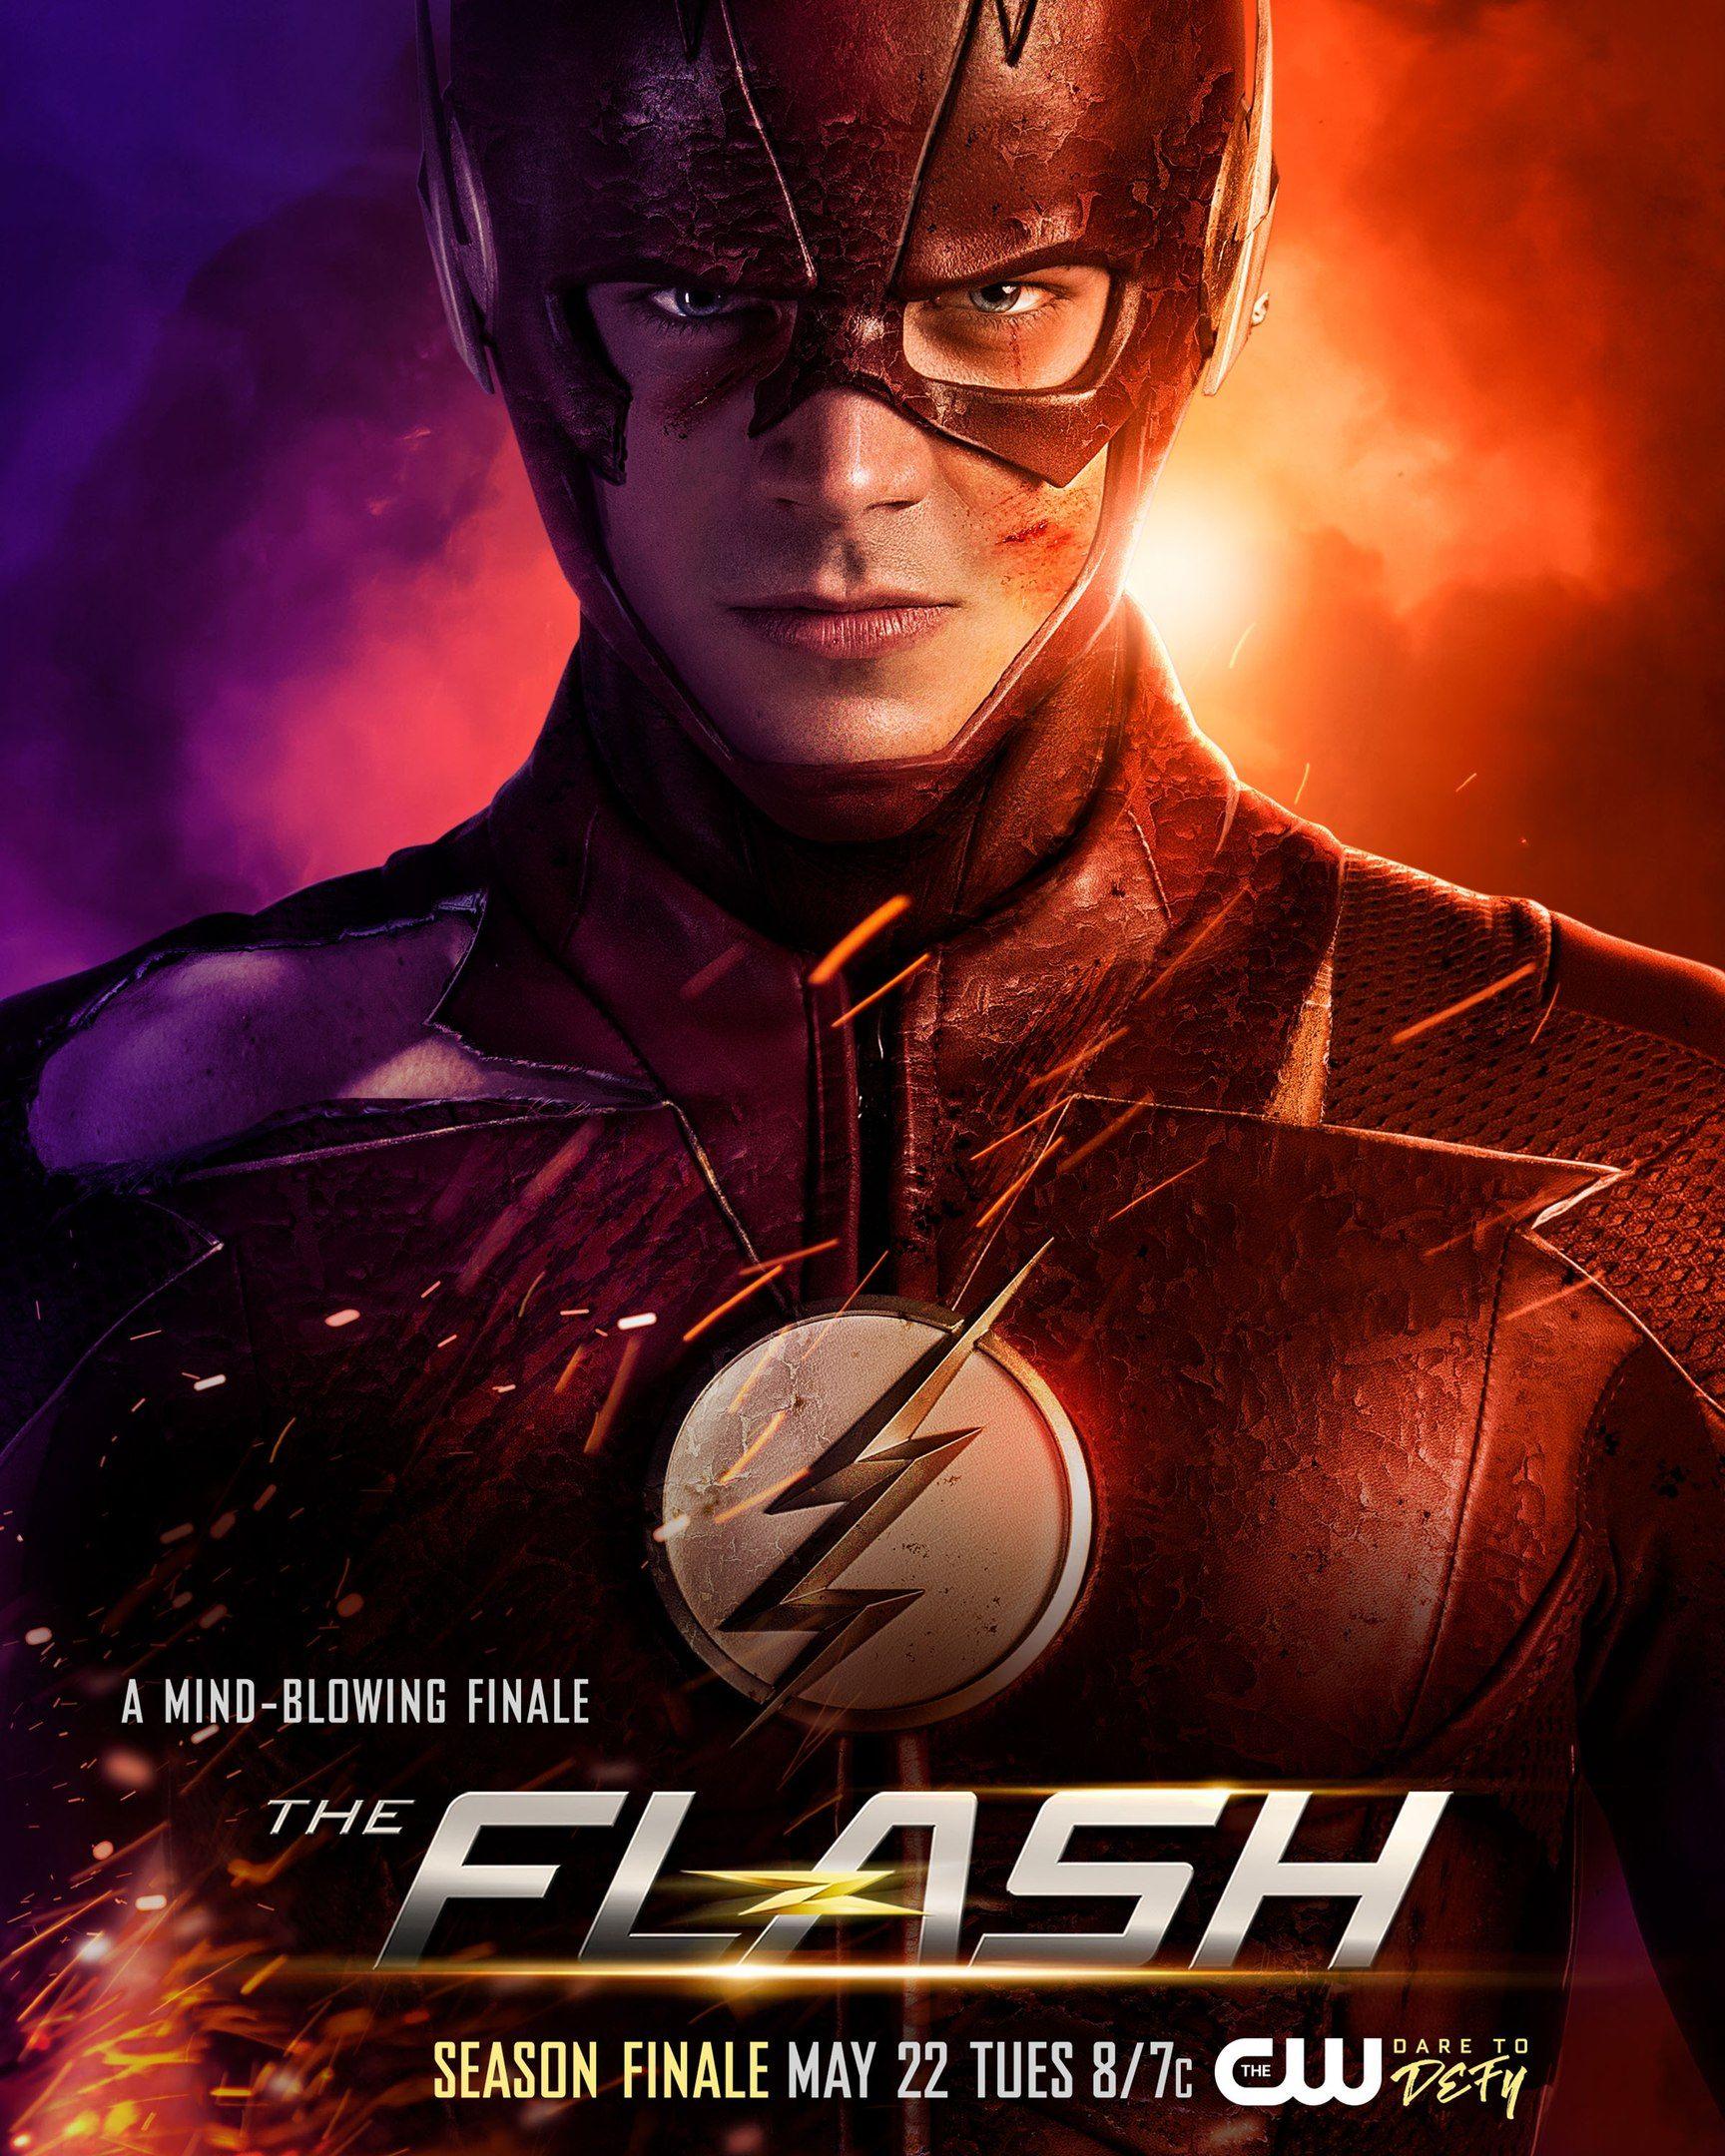 The Flash S4 Episode Poster. The Flash (2014-). Flash season 4